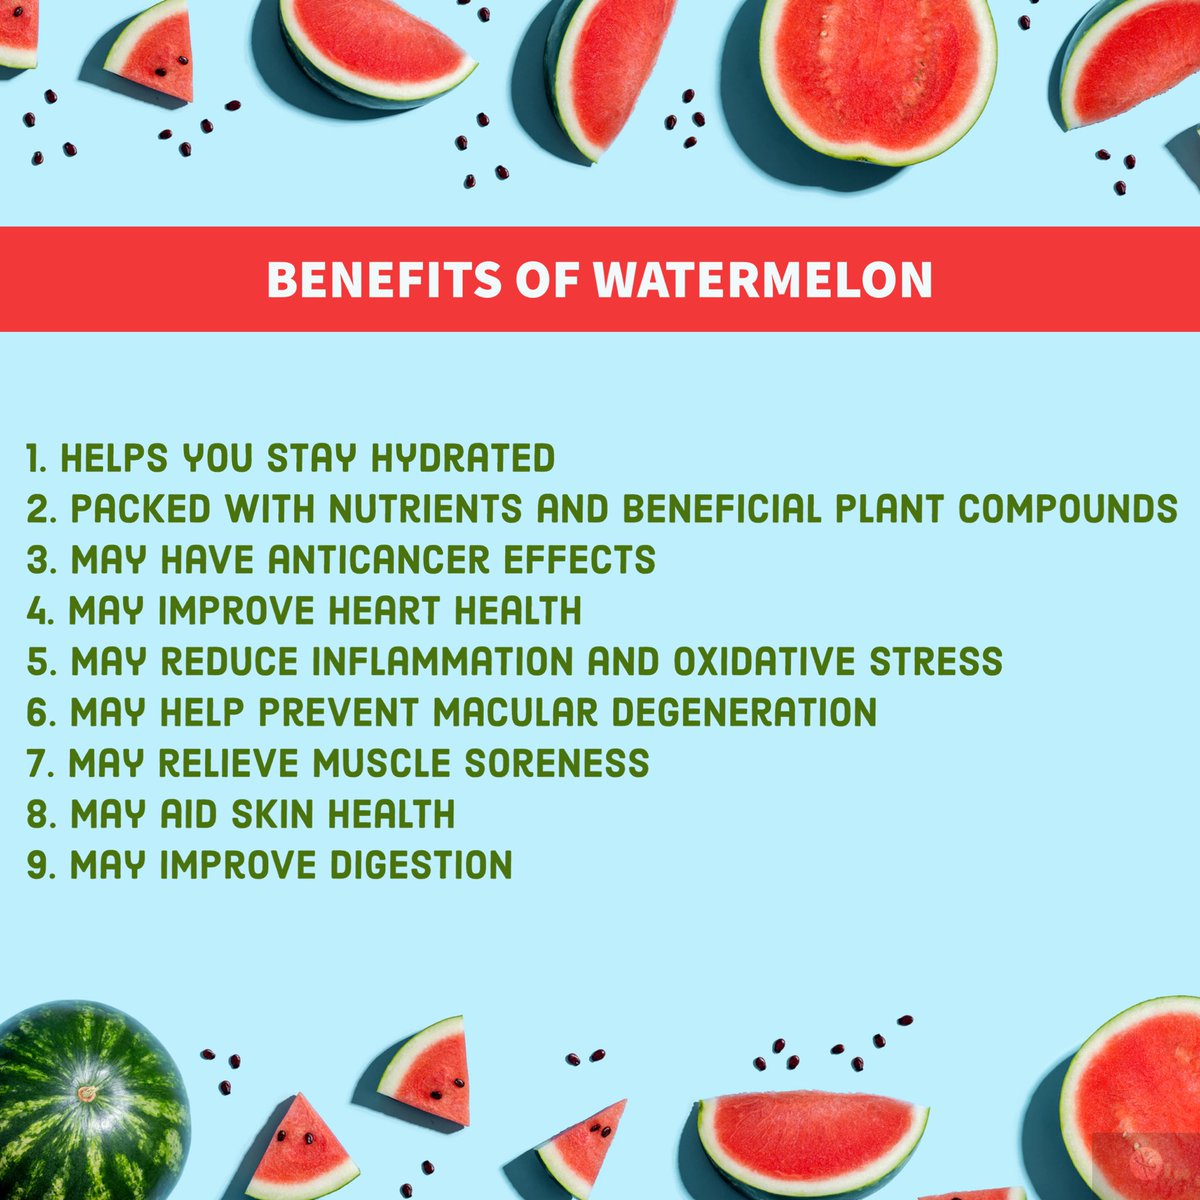 Thankful & Blessed Day! healthline.com/nutrition/wate… Thank you, CM/Project Health & Wellness, LLC #watermelonbenefits #healthyeating #watermelon #healthcoach #selfcare #holistichealth #wellness #healthyfood #healthylifestyle #healthandwellness